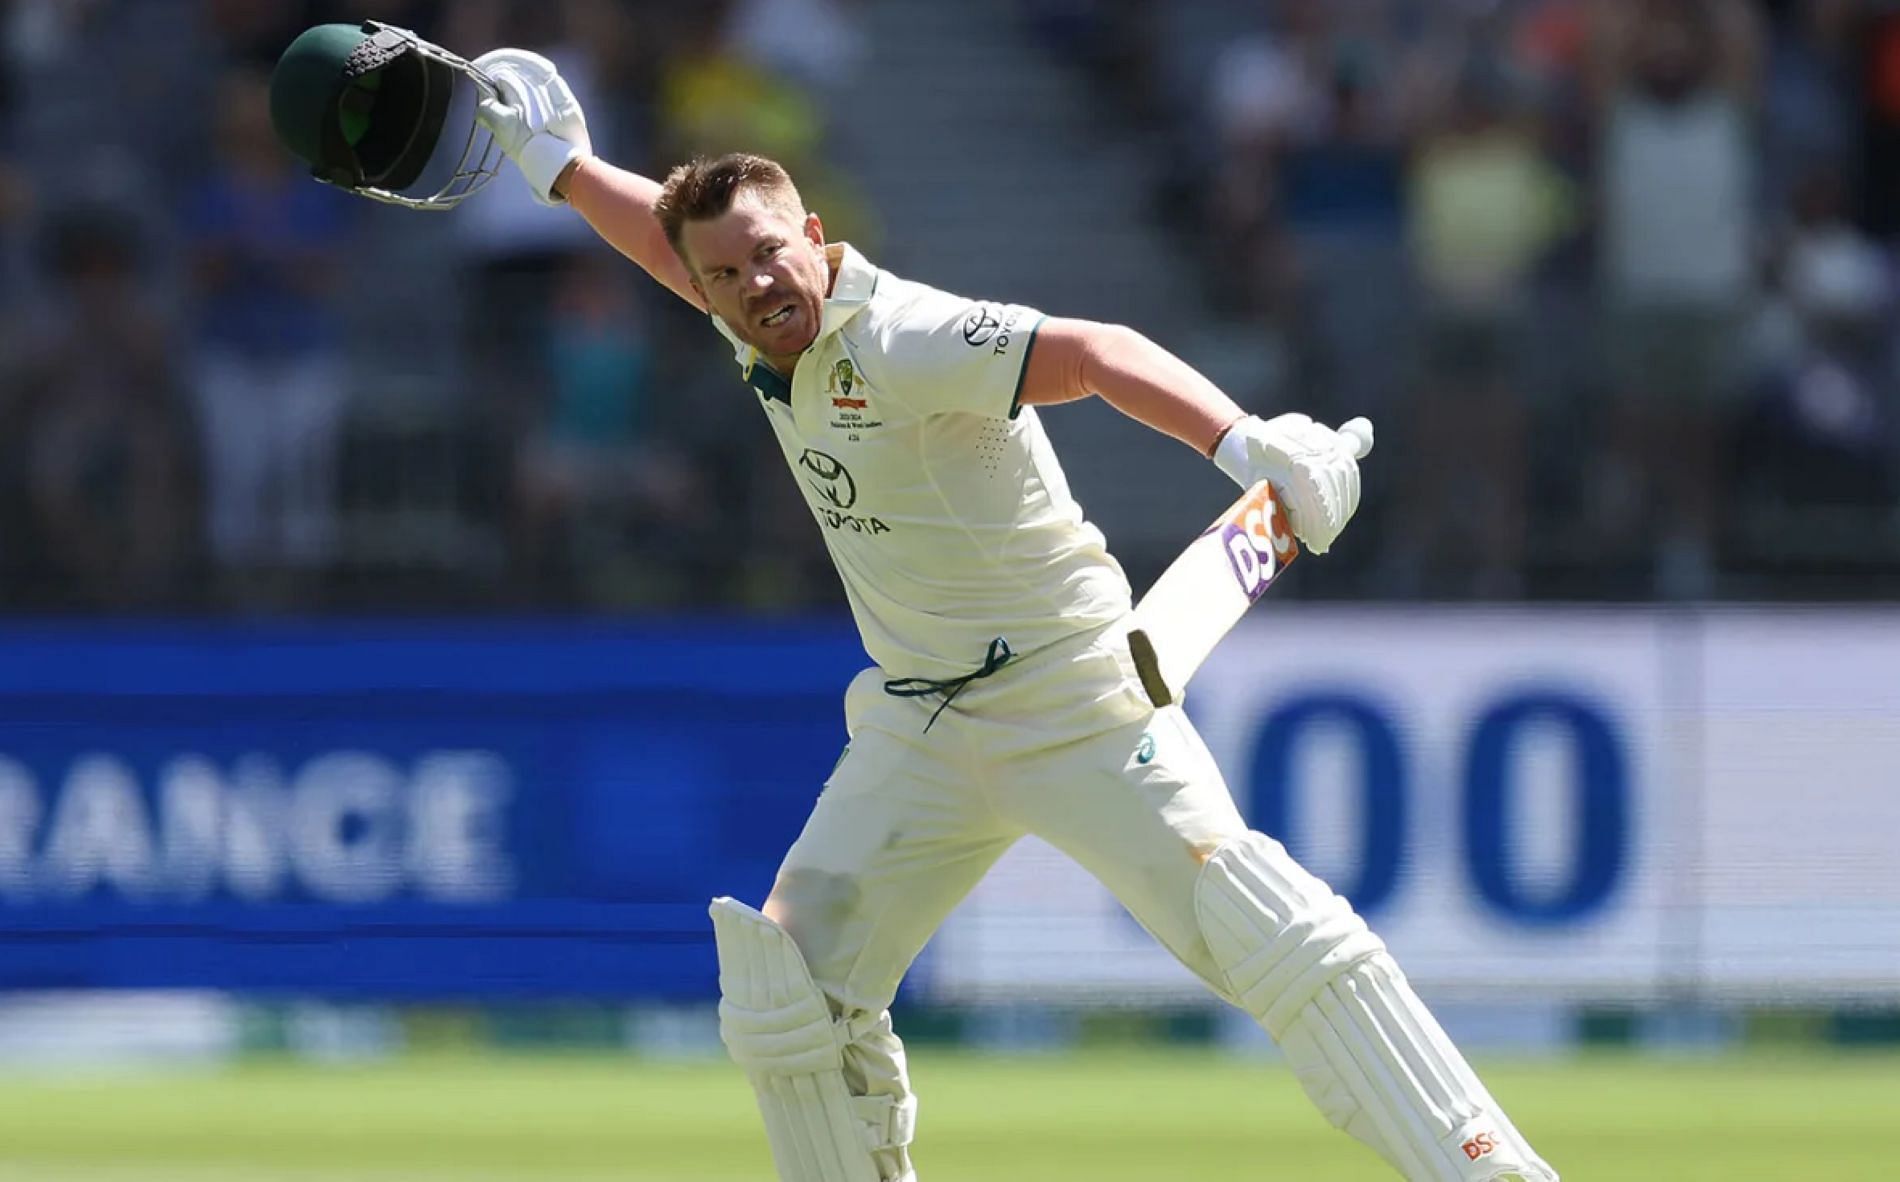 Warner celebrates after scoring his 26th Test century.